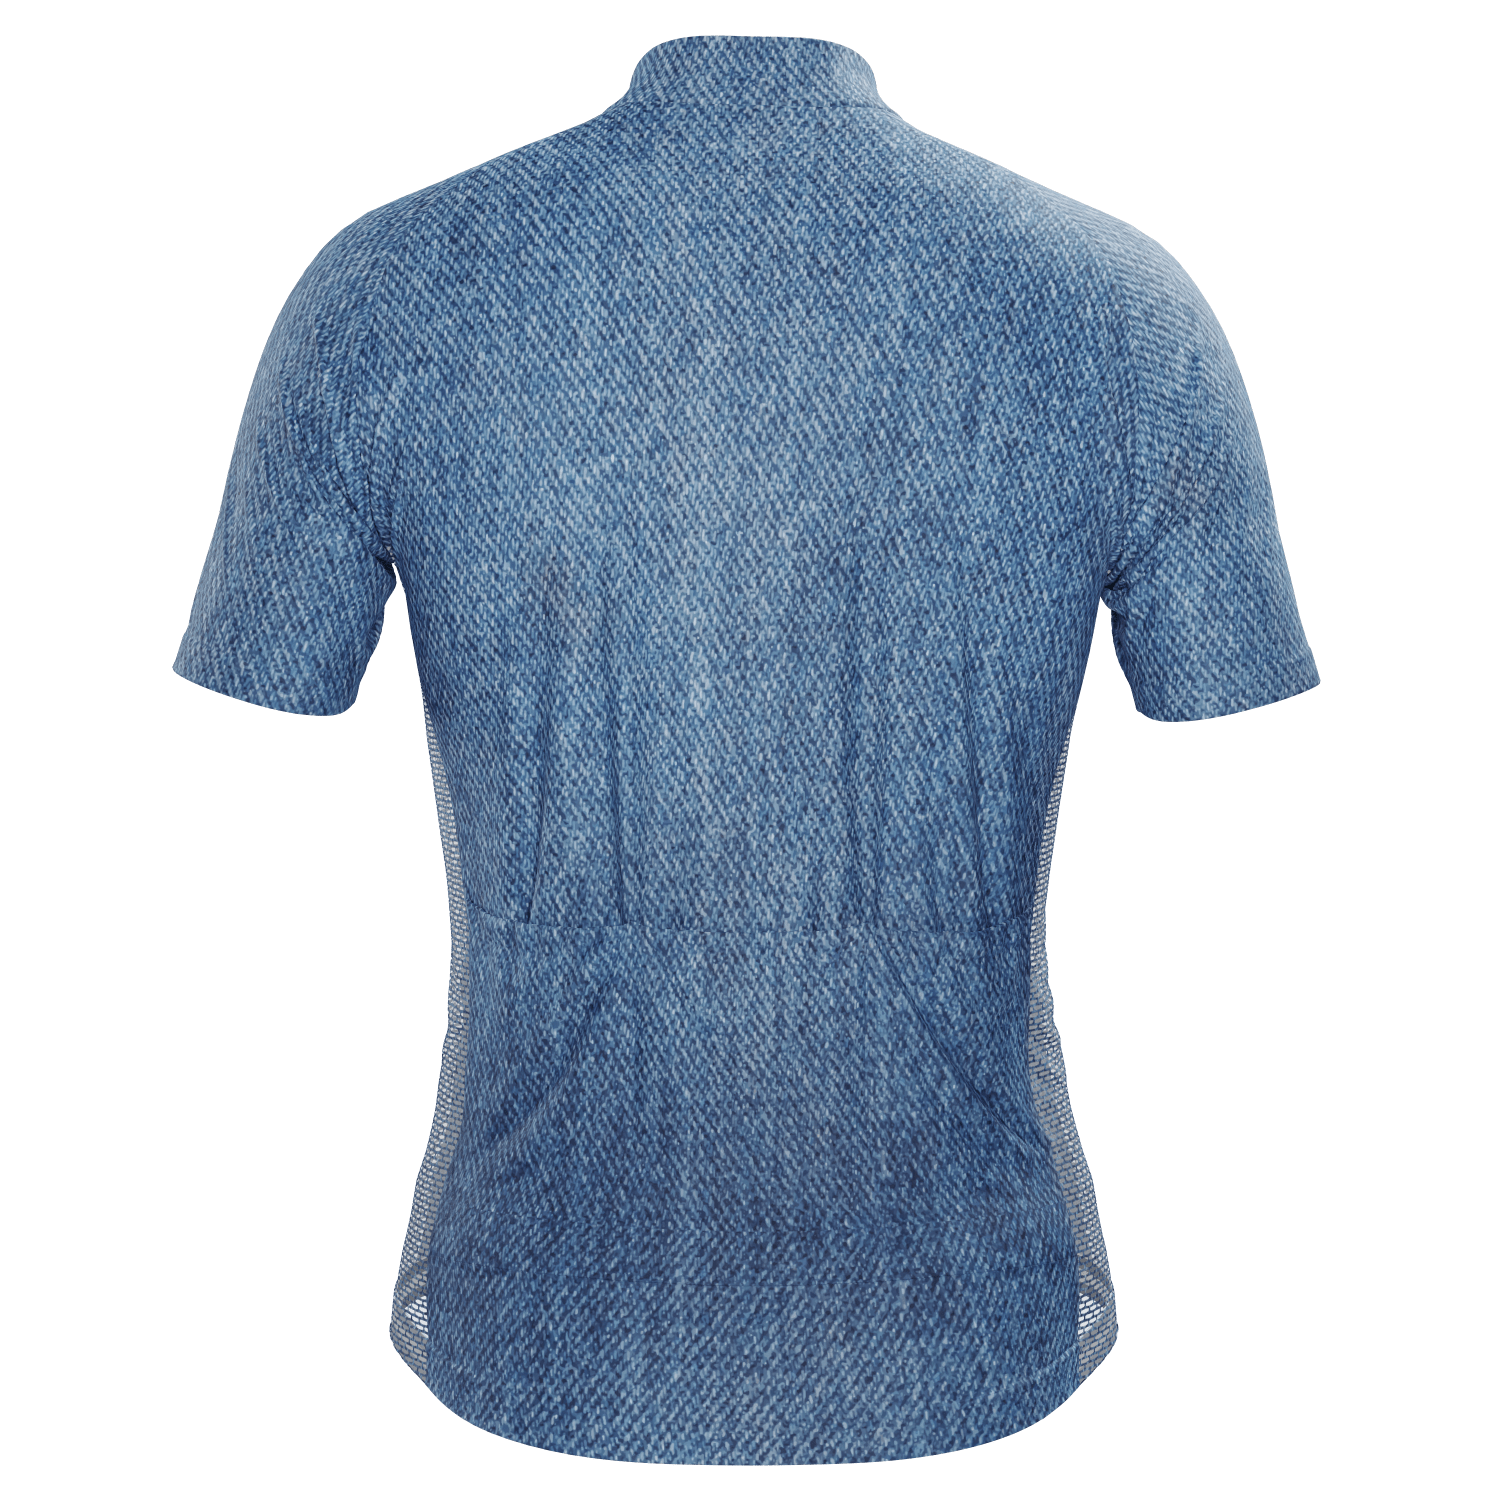 Men's Denim Short Sleeve Cycling Jersey